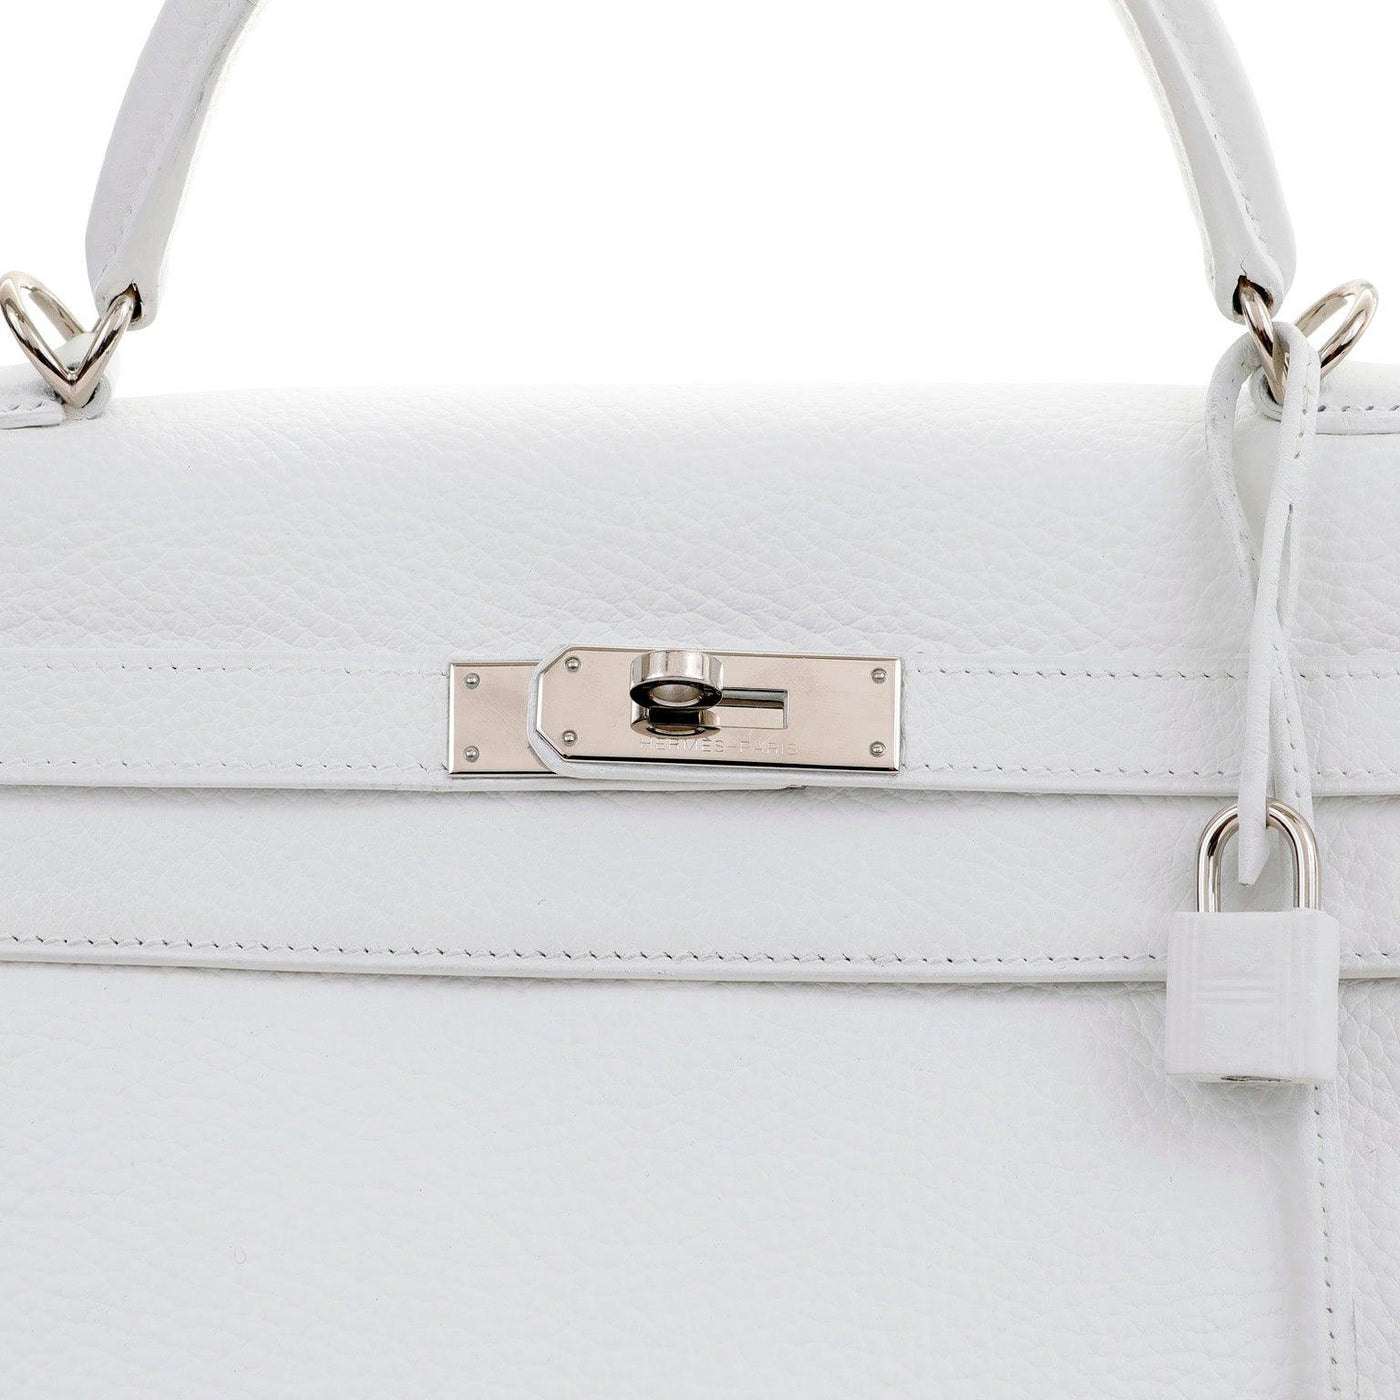 Hermès 32cm White Togo Kelly  Palladium Hardware - Only Authentics